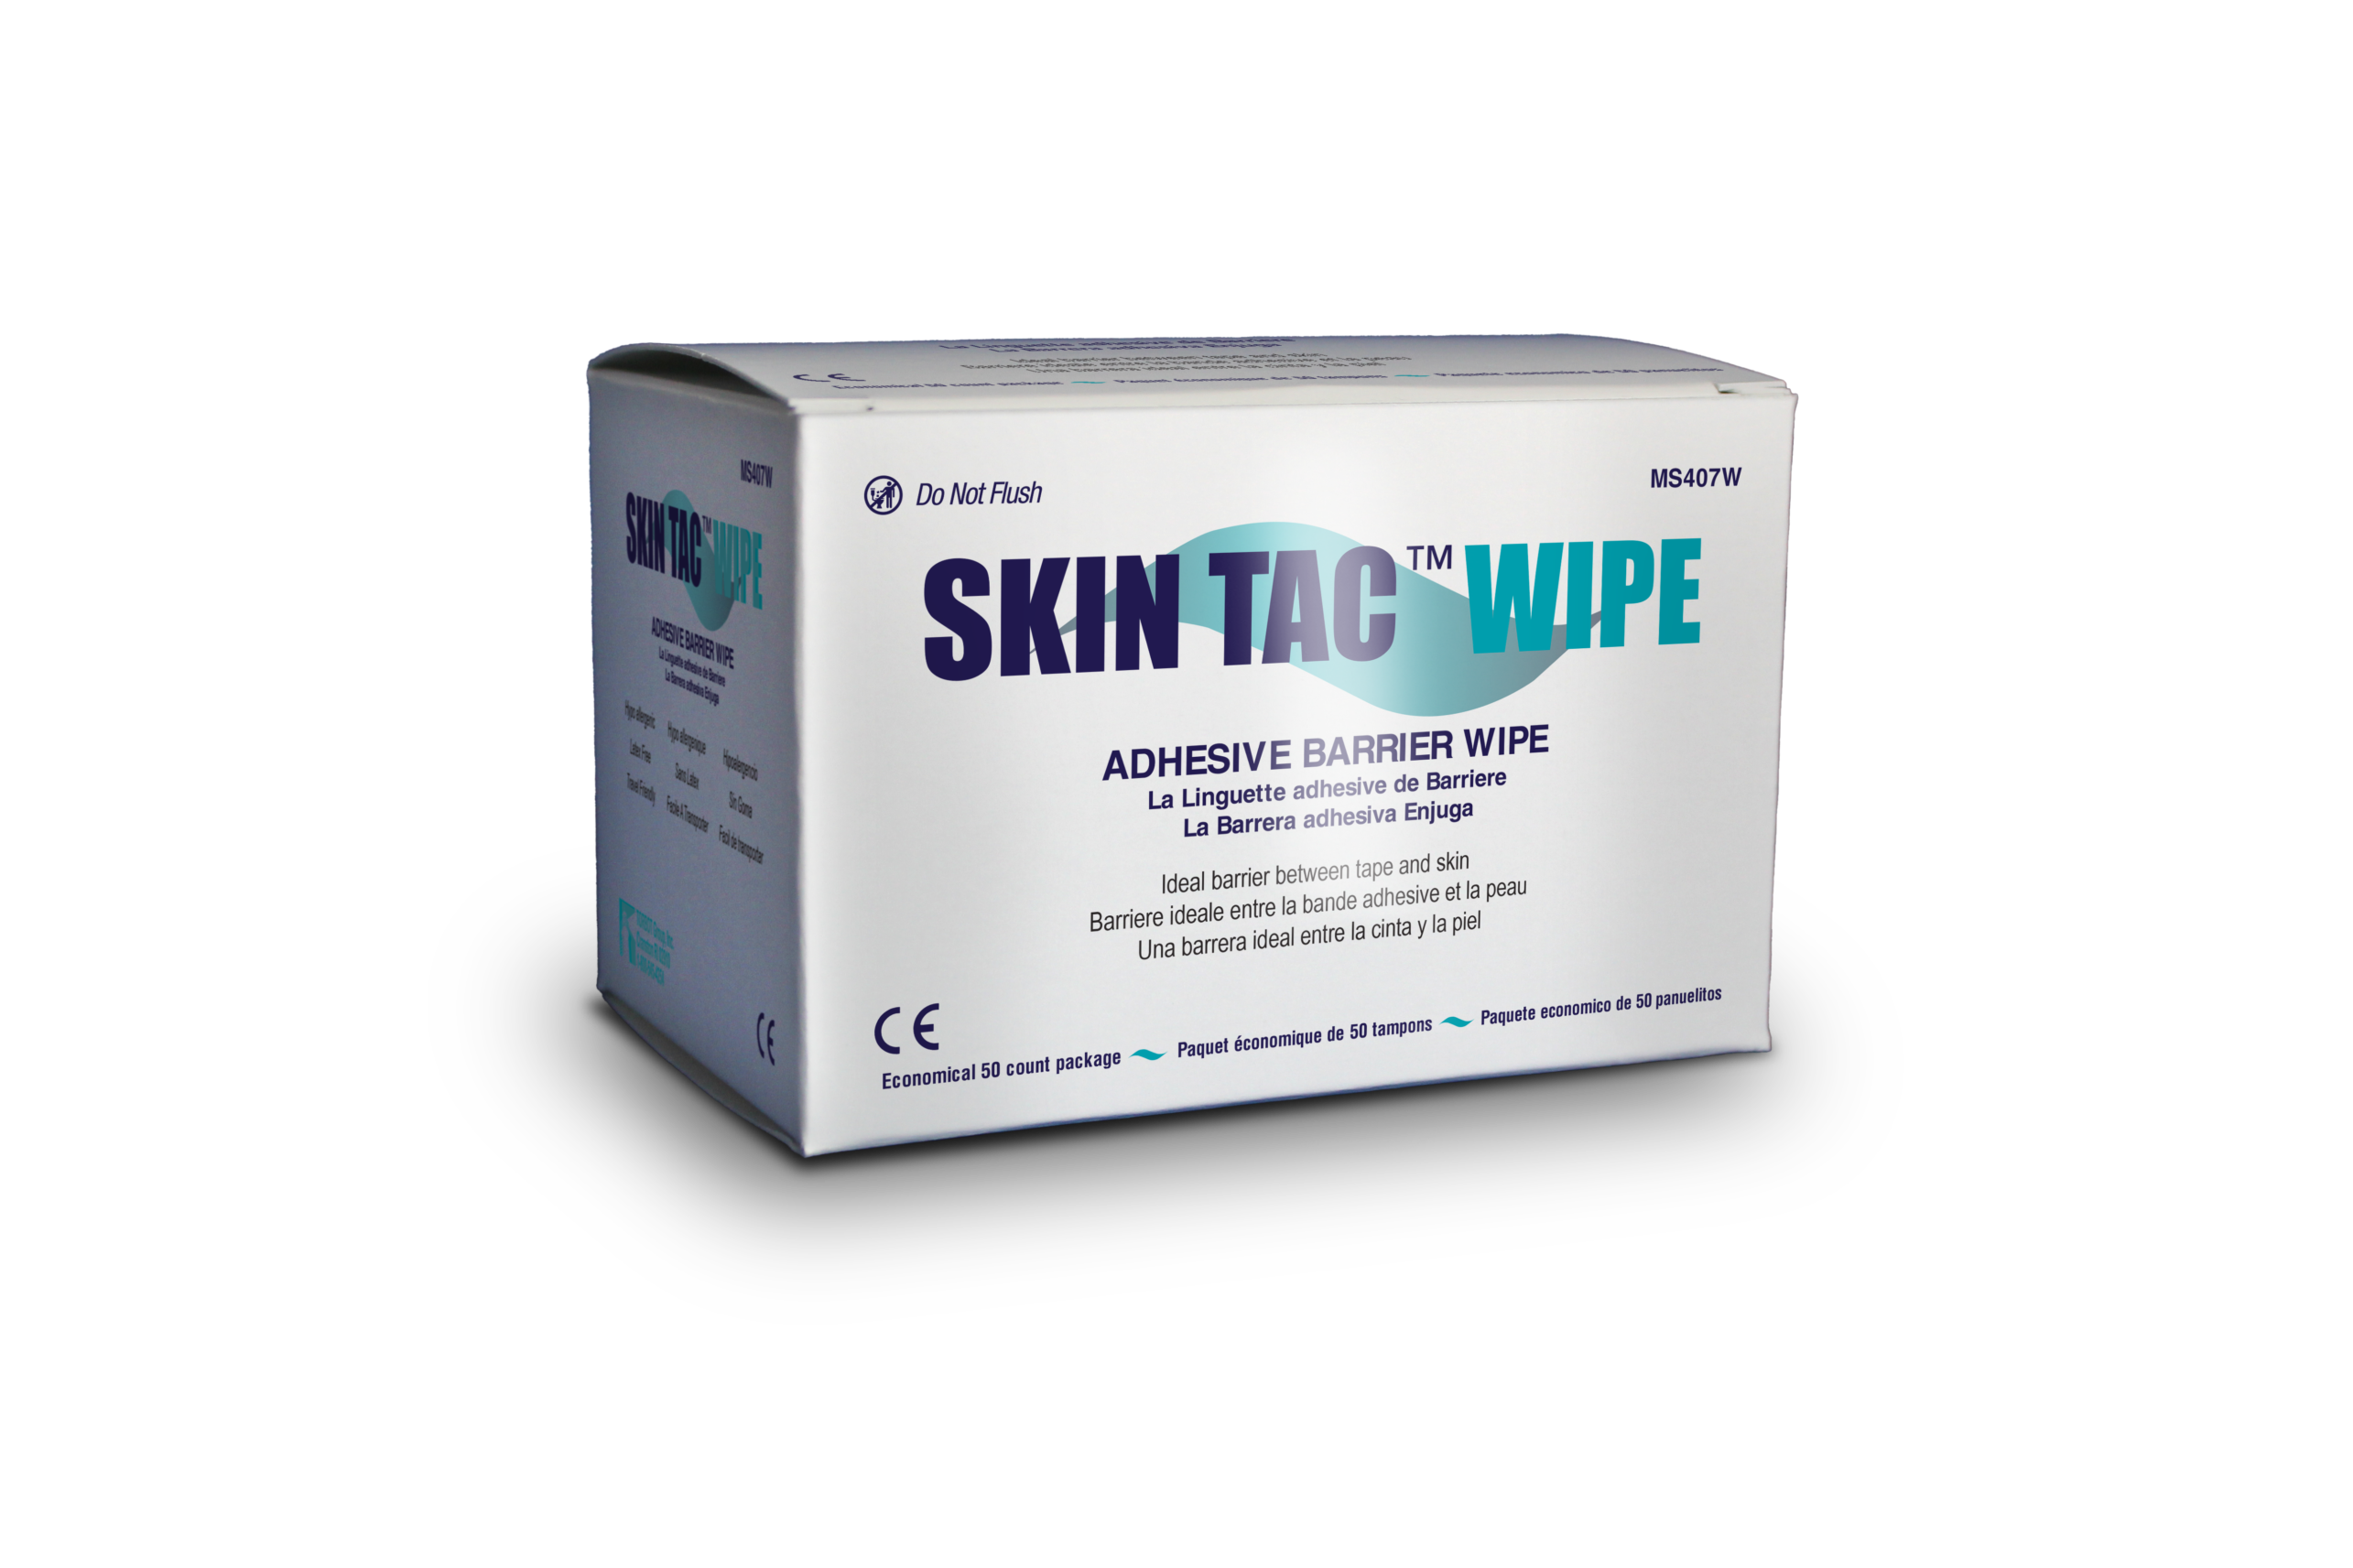 Torbot Skin Tac Adhesive Barrier Liquid 4 oz with Applicator - 1 Bottl